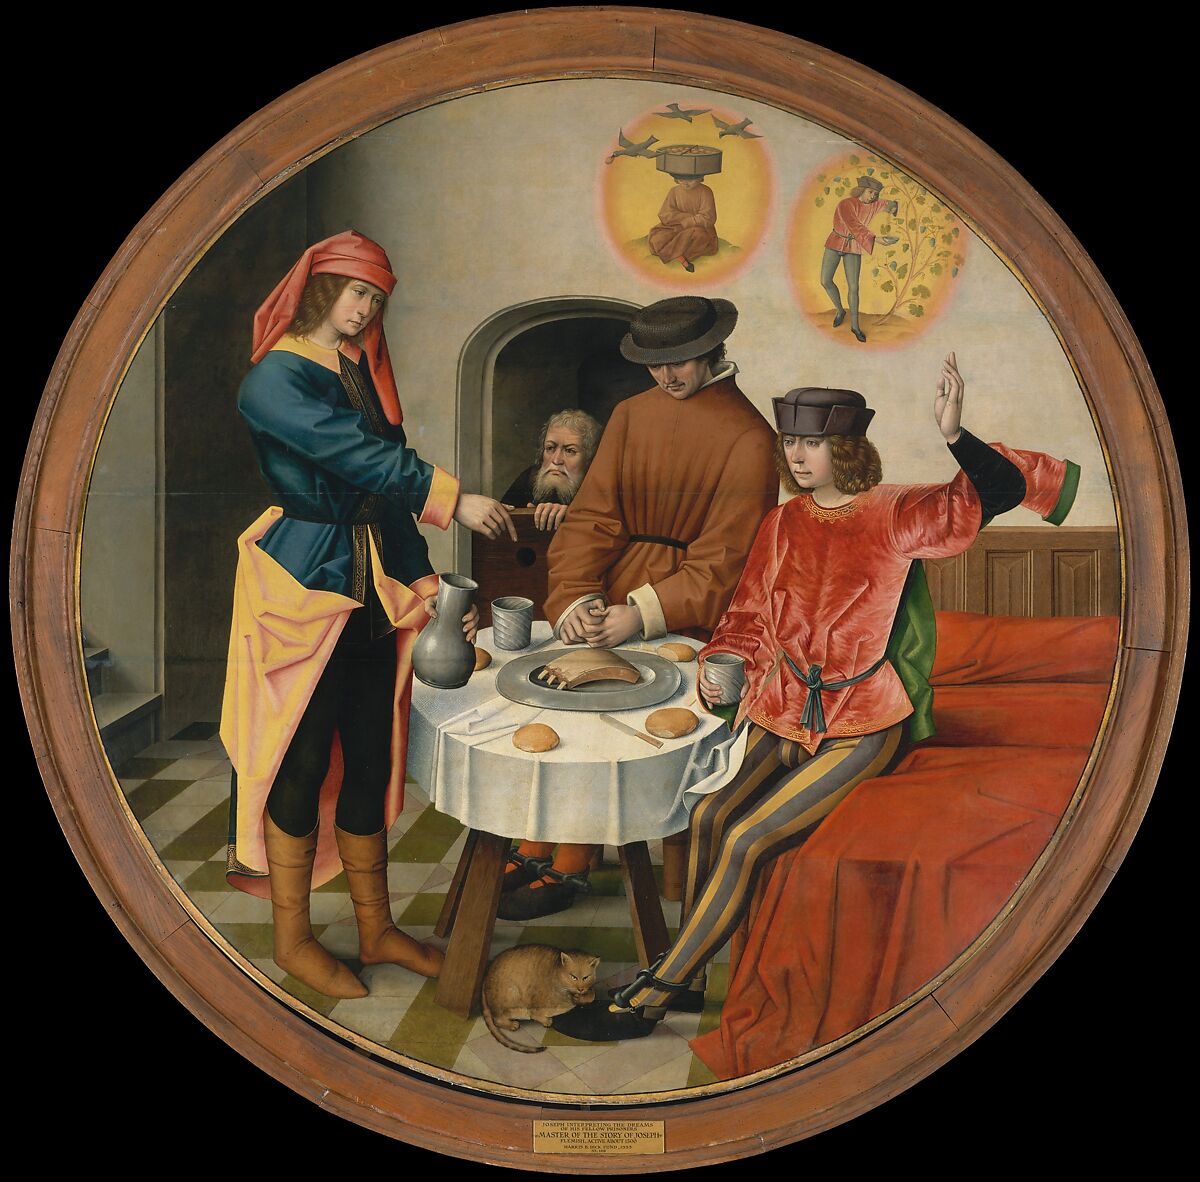 Joseph Interpreting the Dreams of His Fellow Prisoners, Master of the Story of Joseph (Netherlandish, ca. 1500), Oil on wood 